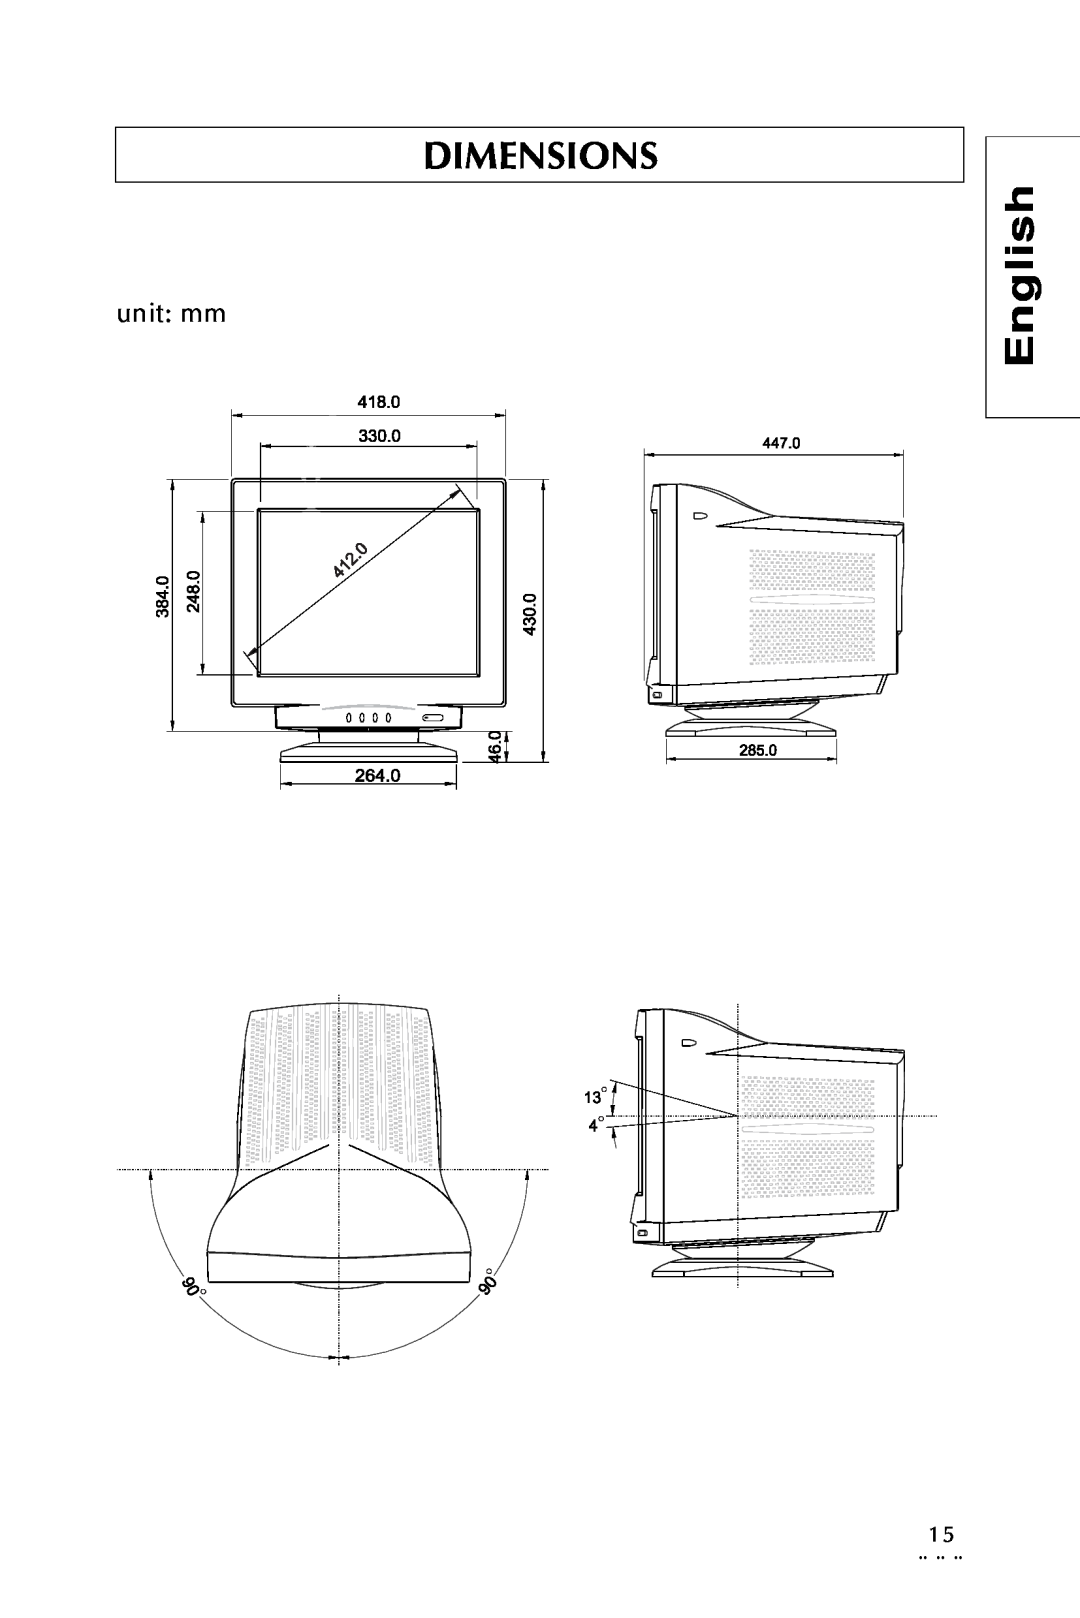 Sony Trinitron CRT Monitor specifications Dimensions, English, unit mm, ¨ ¨ ¨ 